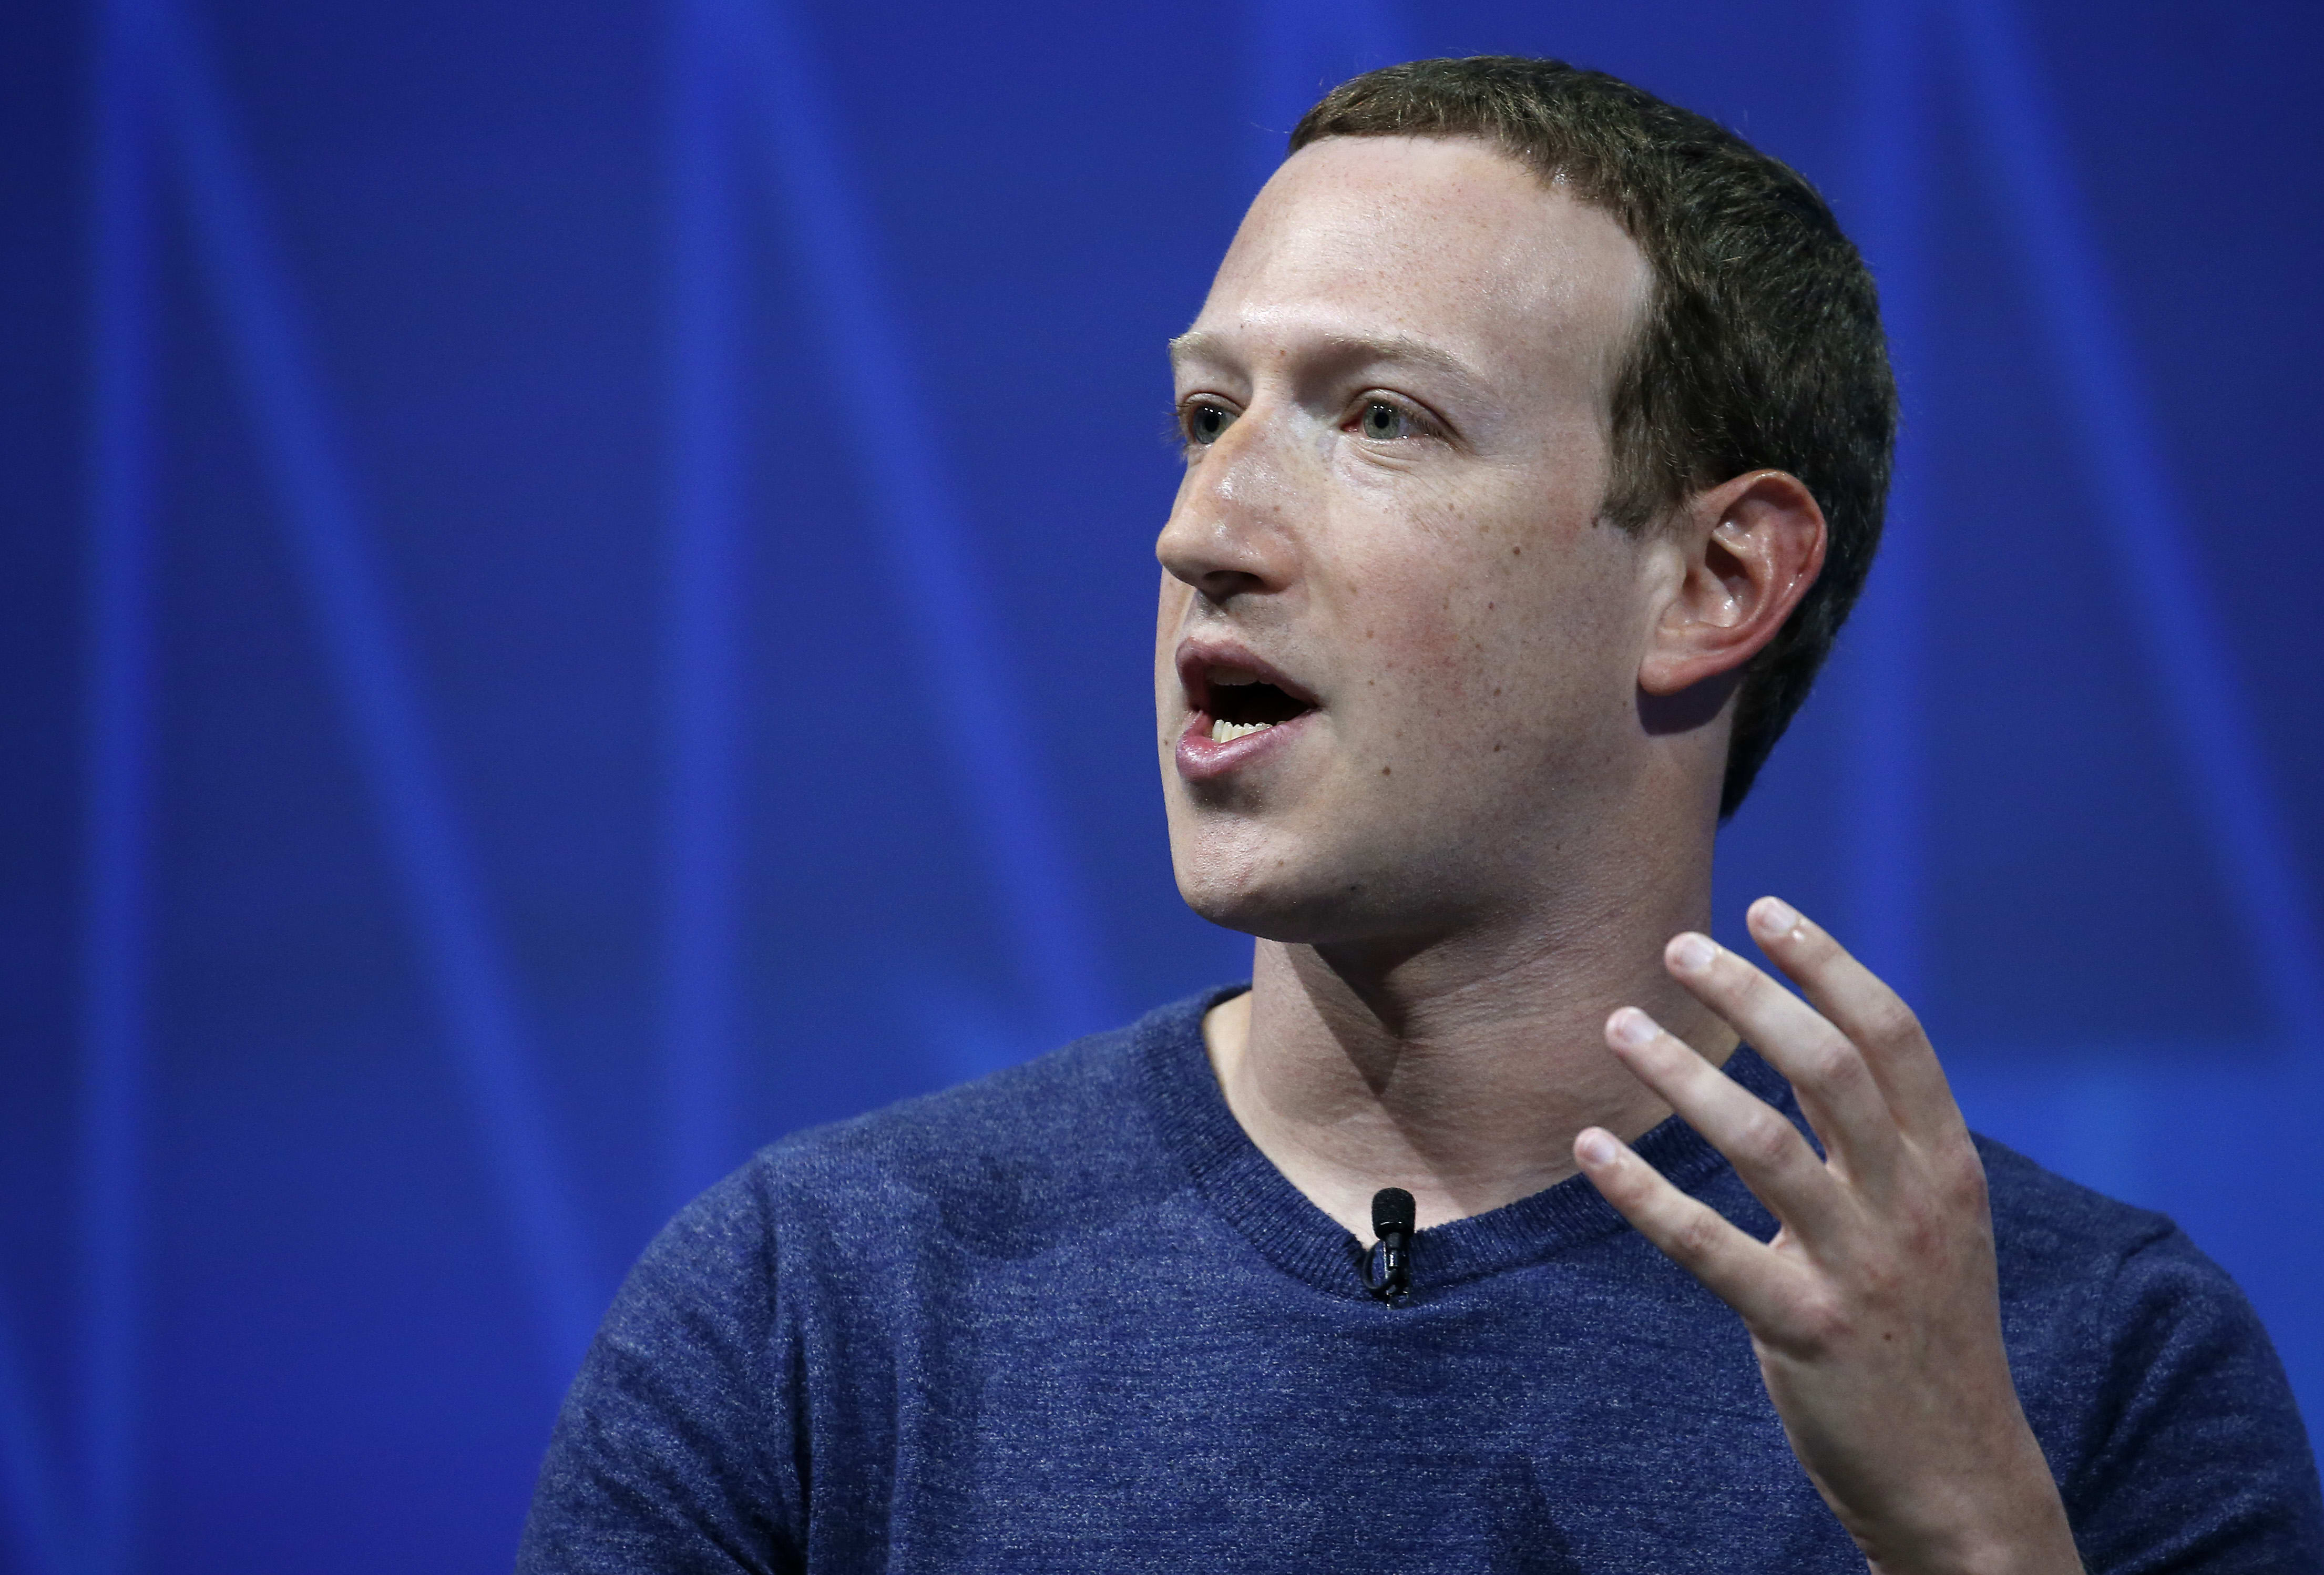 Facebook details plans for new Oversight Board